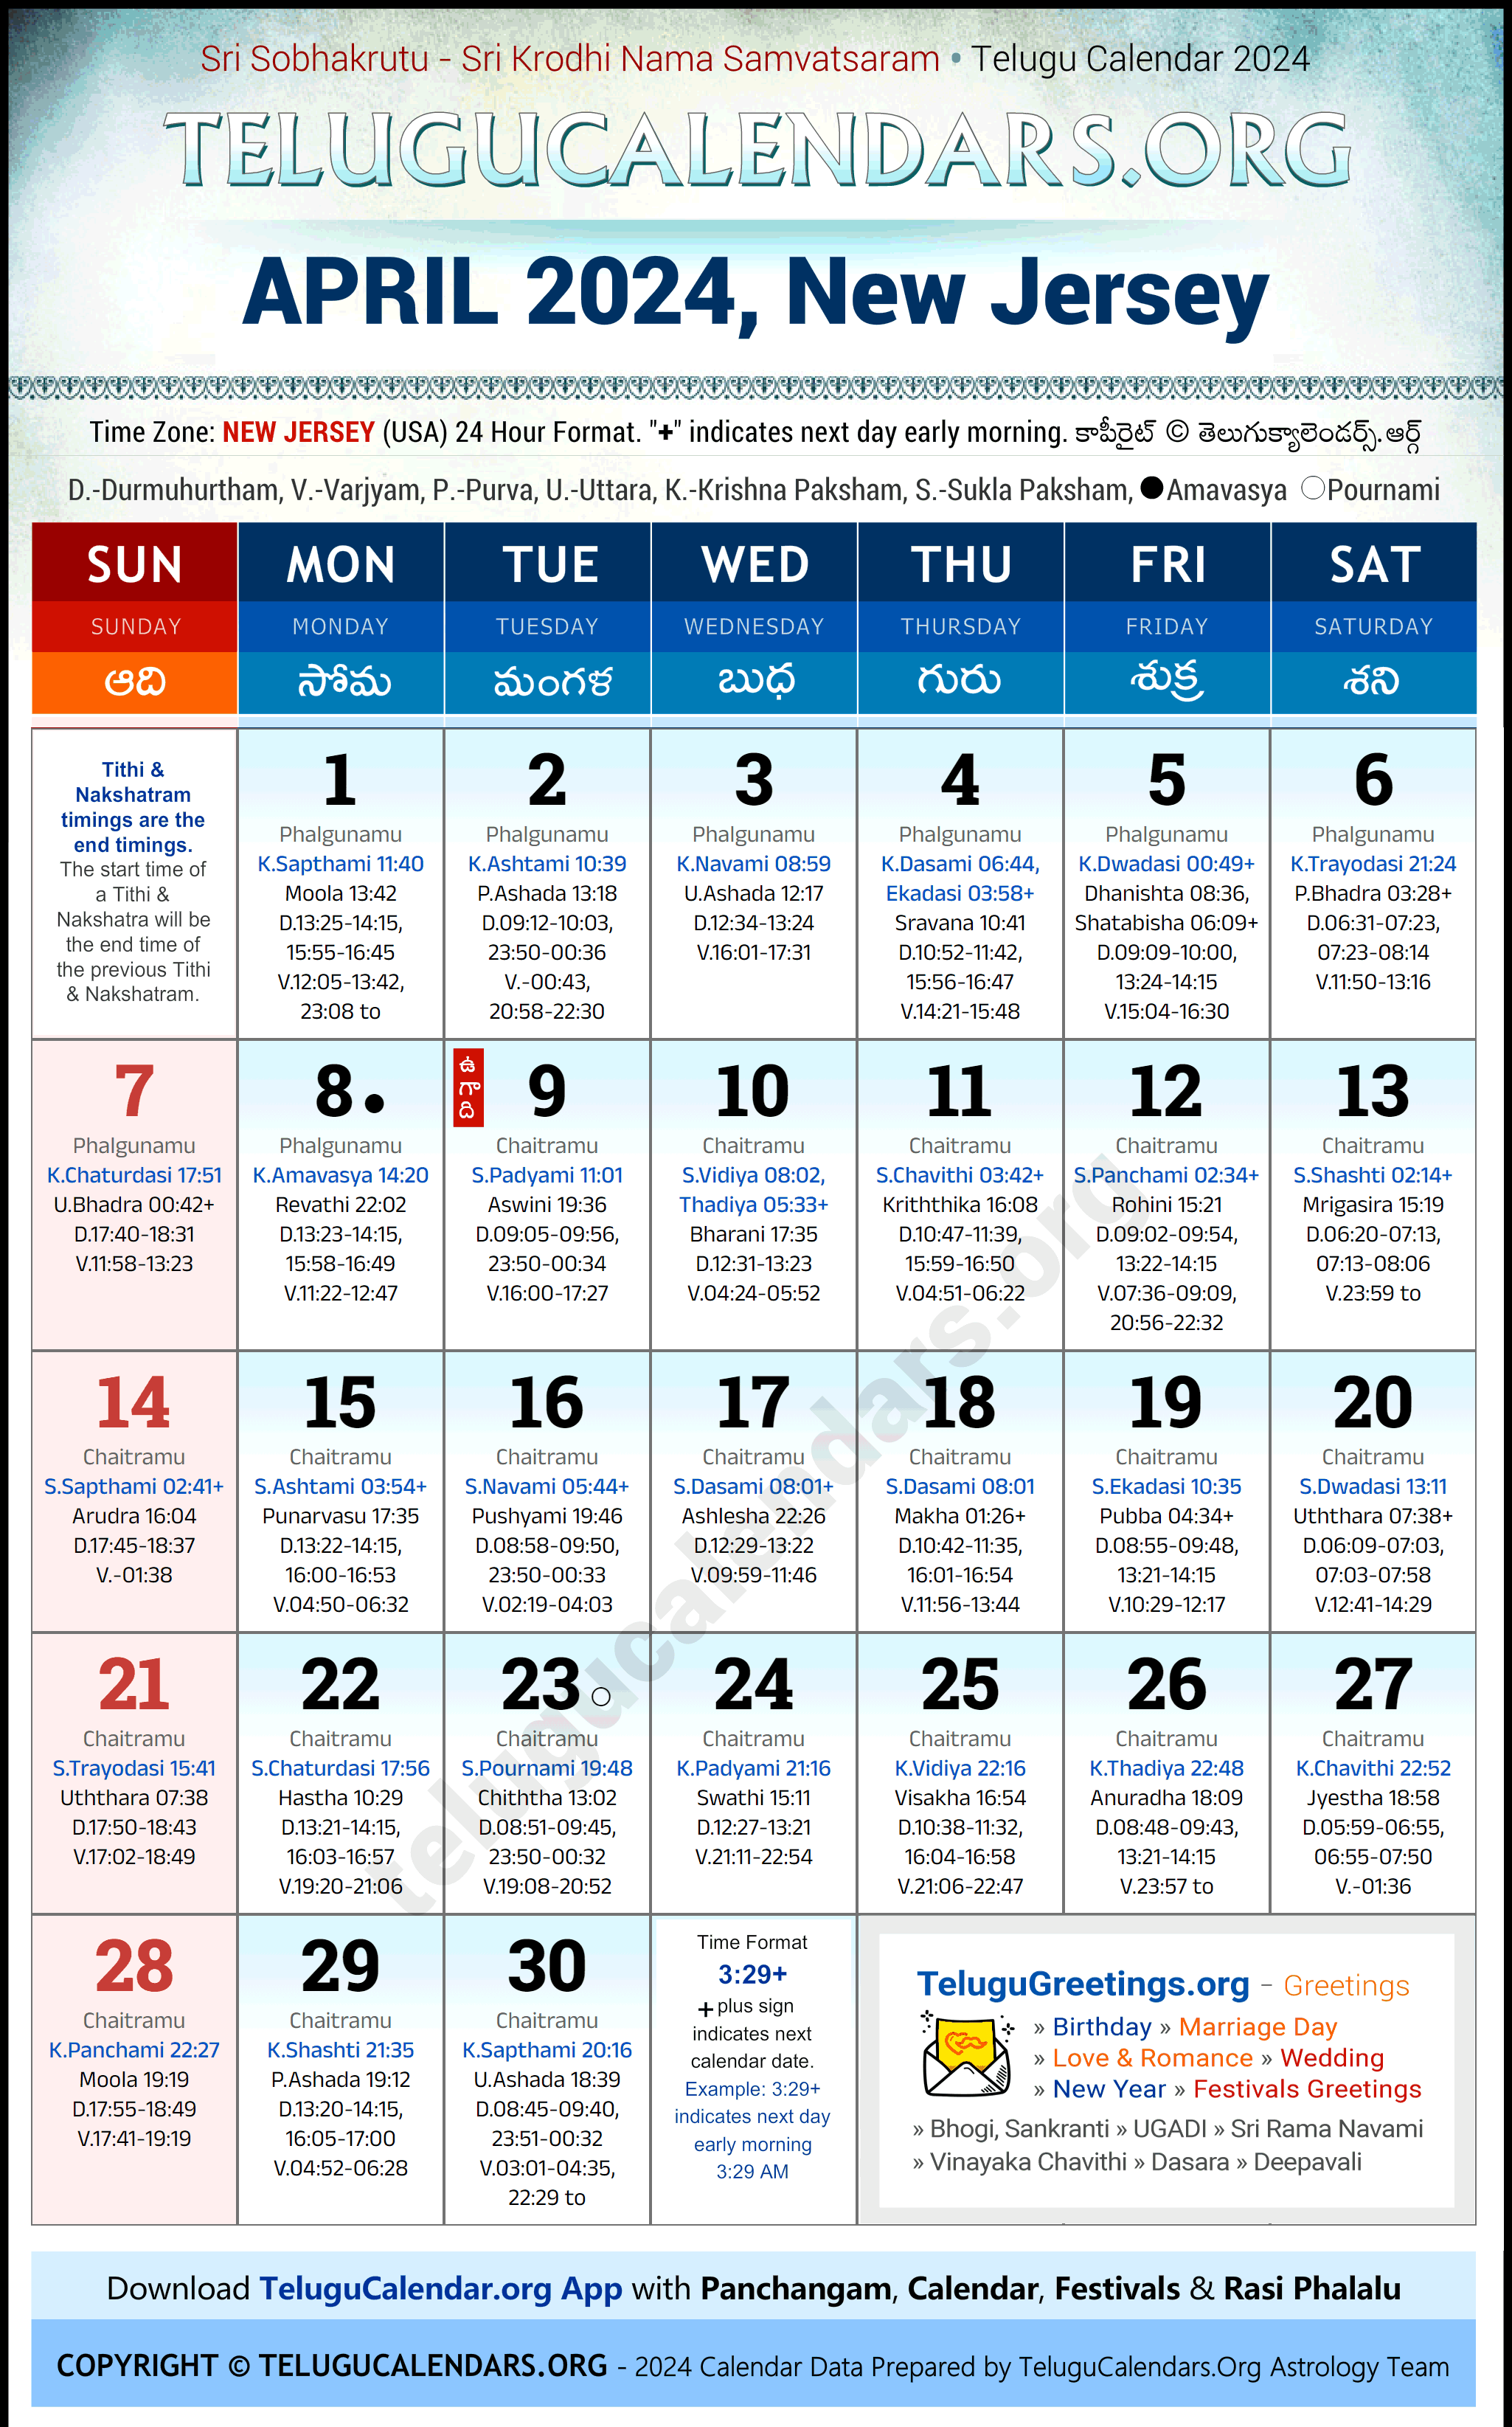 Telugu Calendar 2024 April Festivals for New Jersey